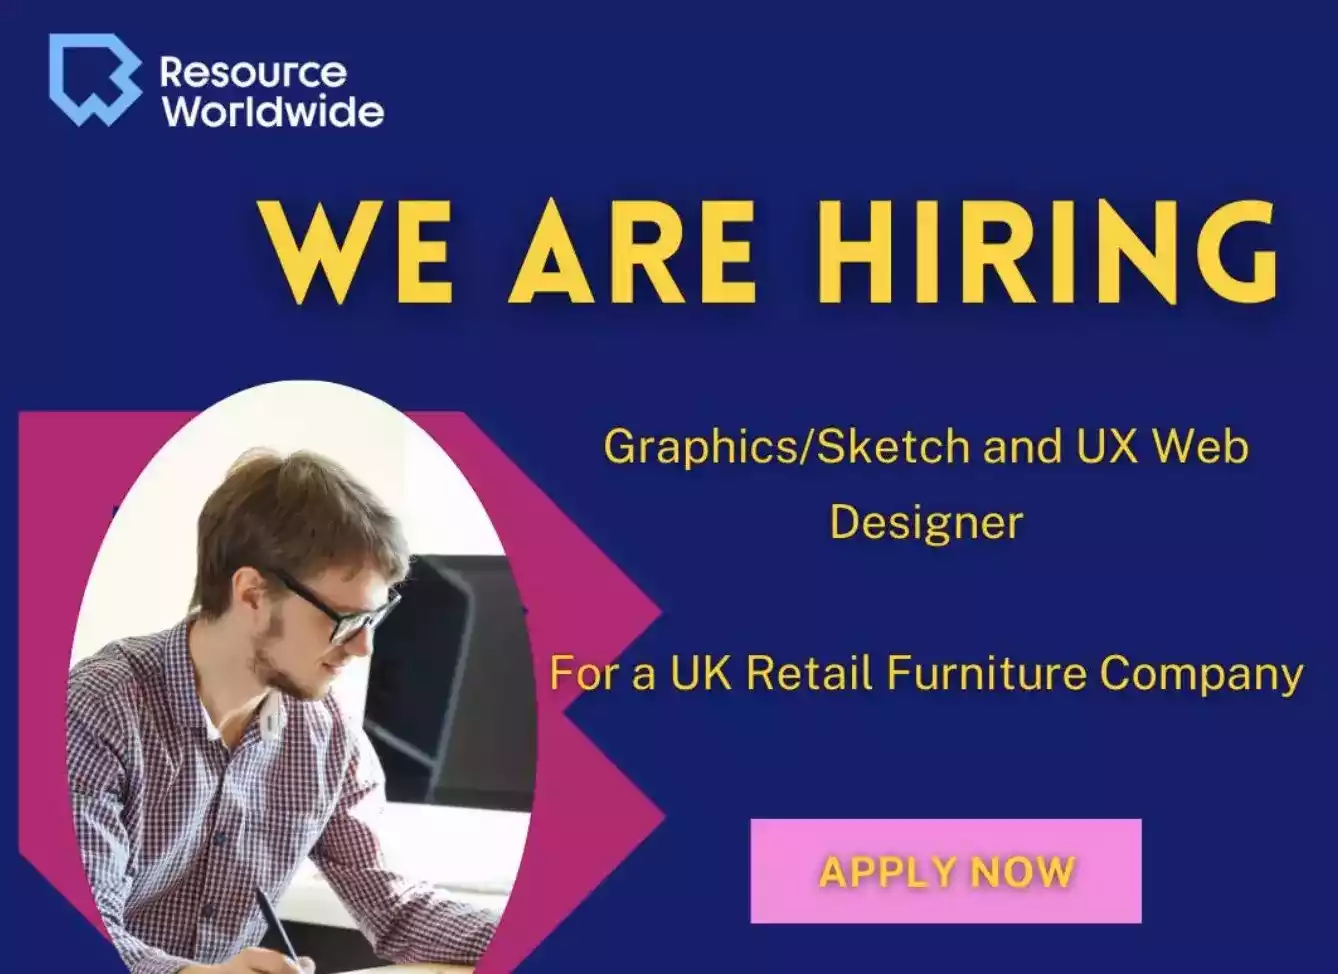 Resource Worldwide is hiring Graphics/Sketch and UX Web Designer